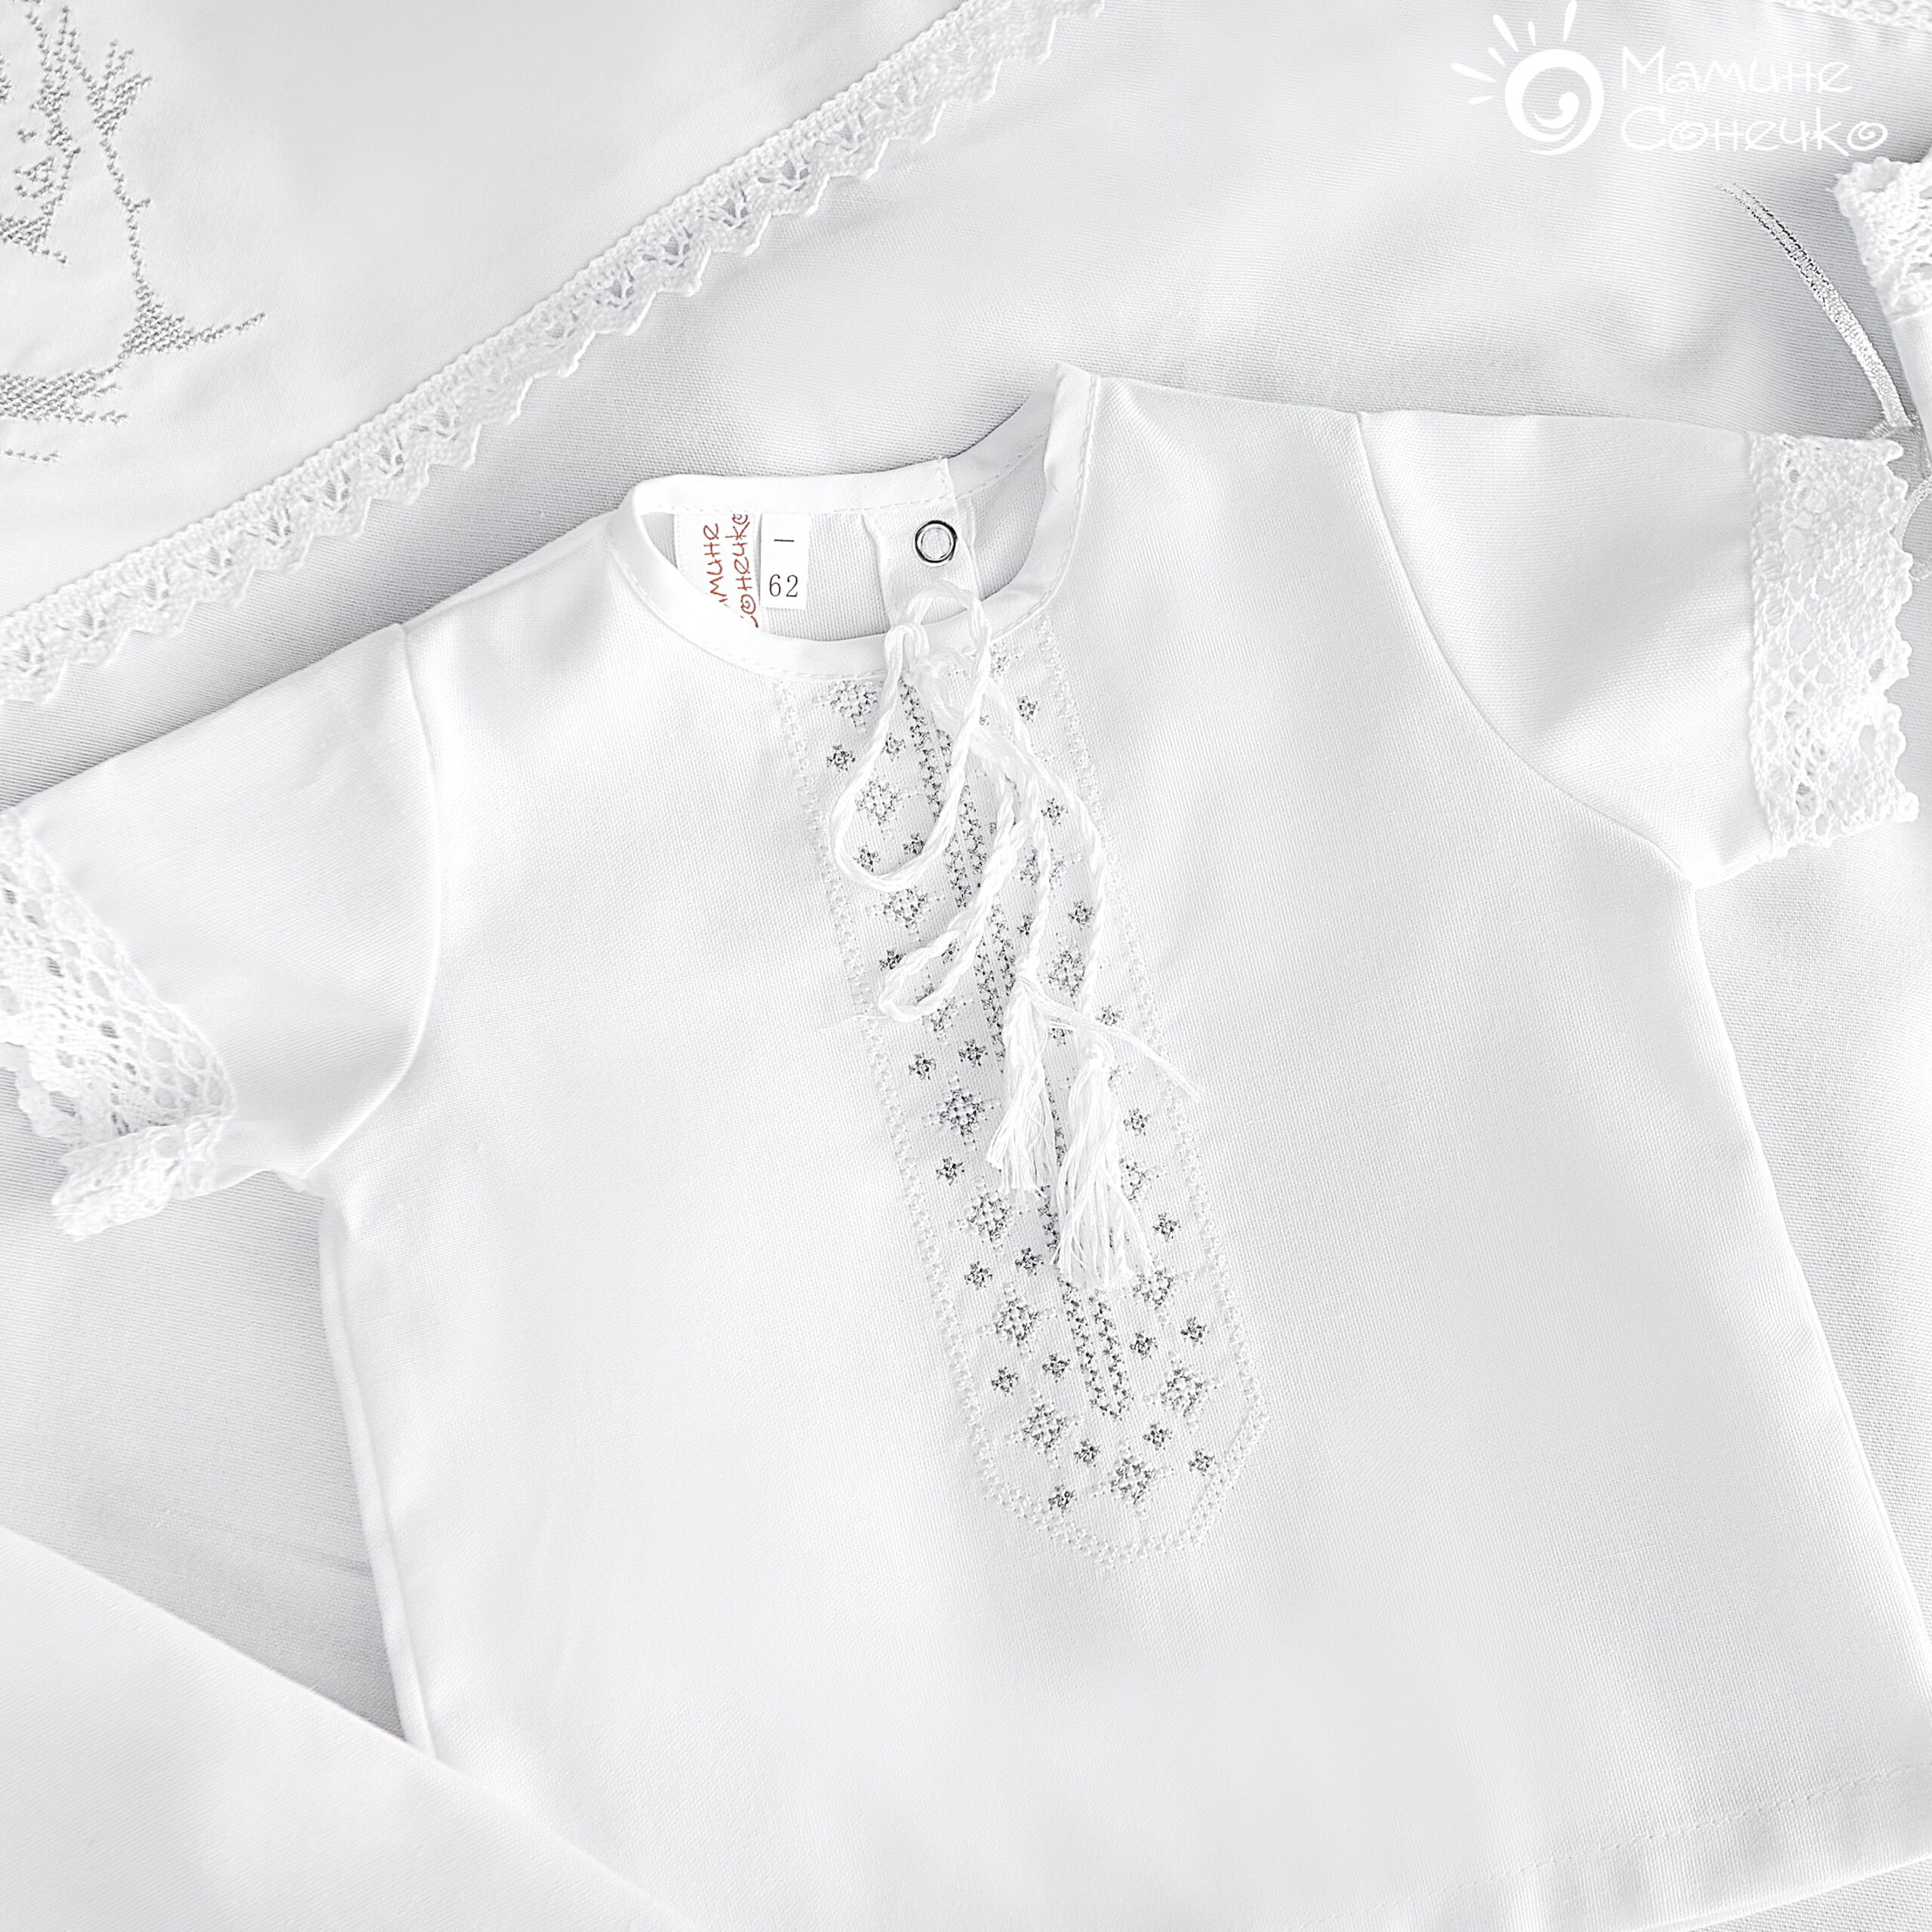 Рубашка для крещения мальчика “Галичанин” серебро, лен